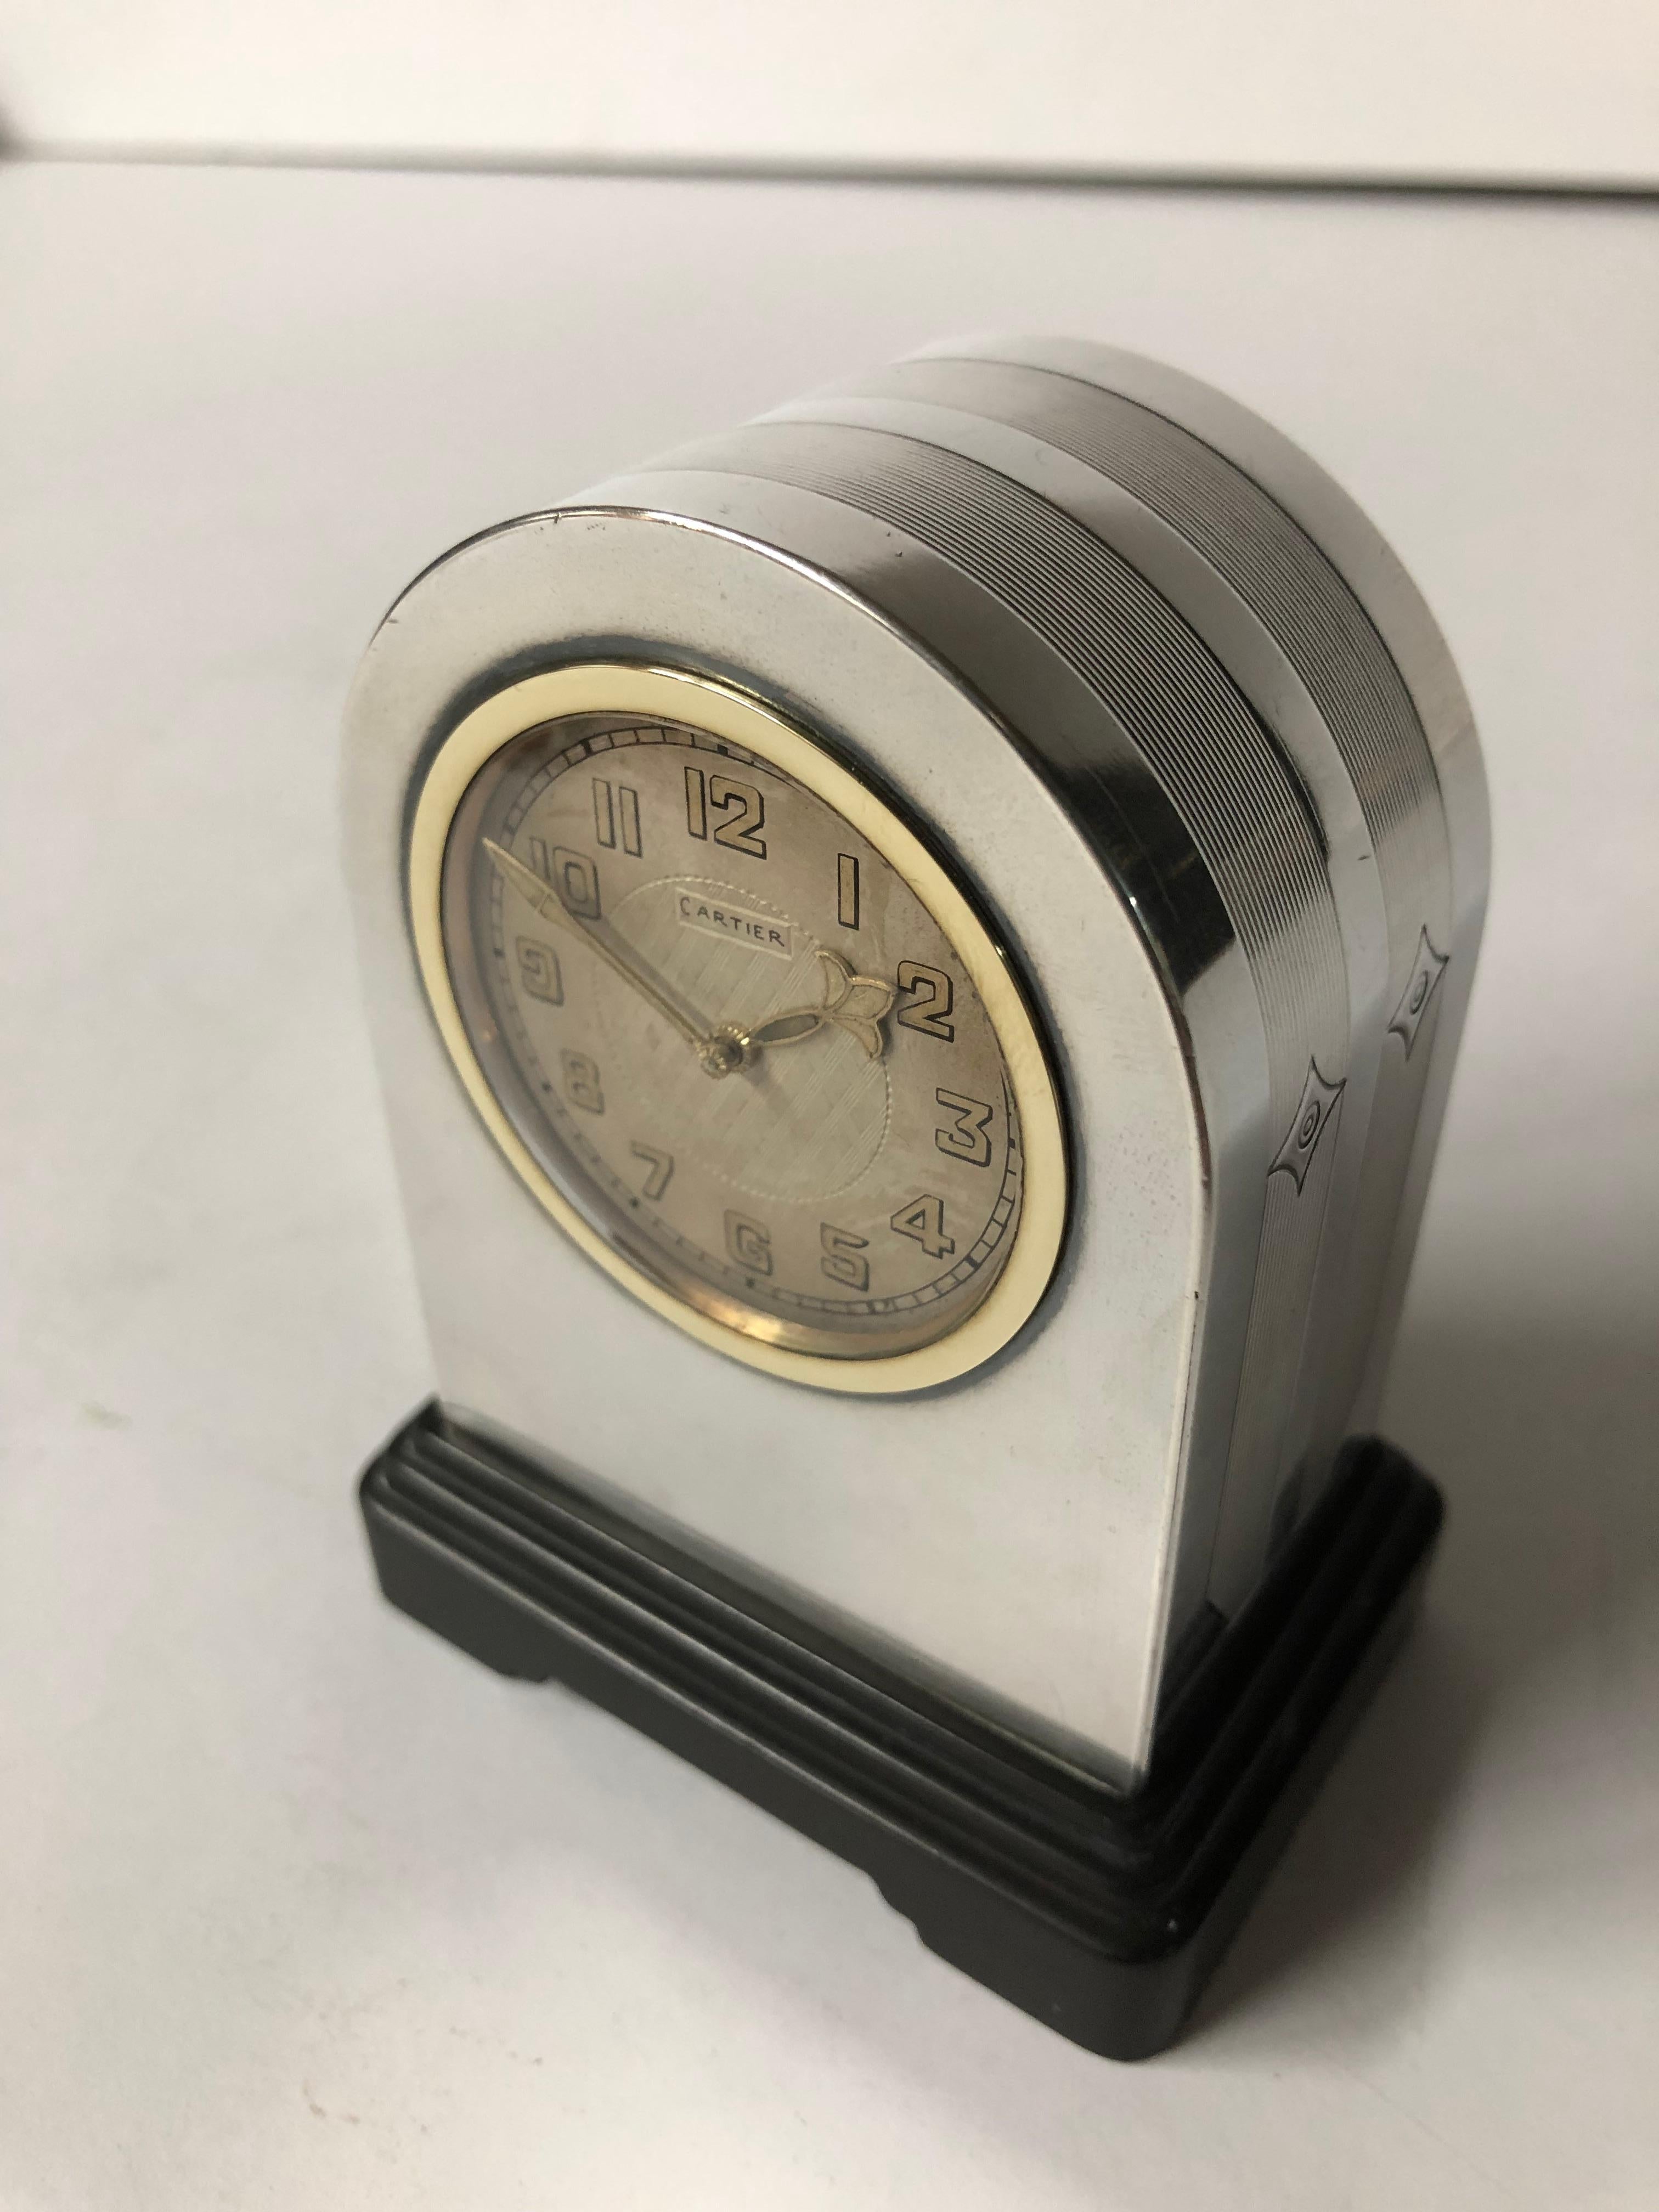 1930s Cartier sterling silver desk clock
-European Watch Co movement
-18-karat gold bezel
-Onyx base
-Includes key.

Hallmarked 
